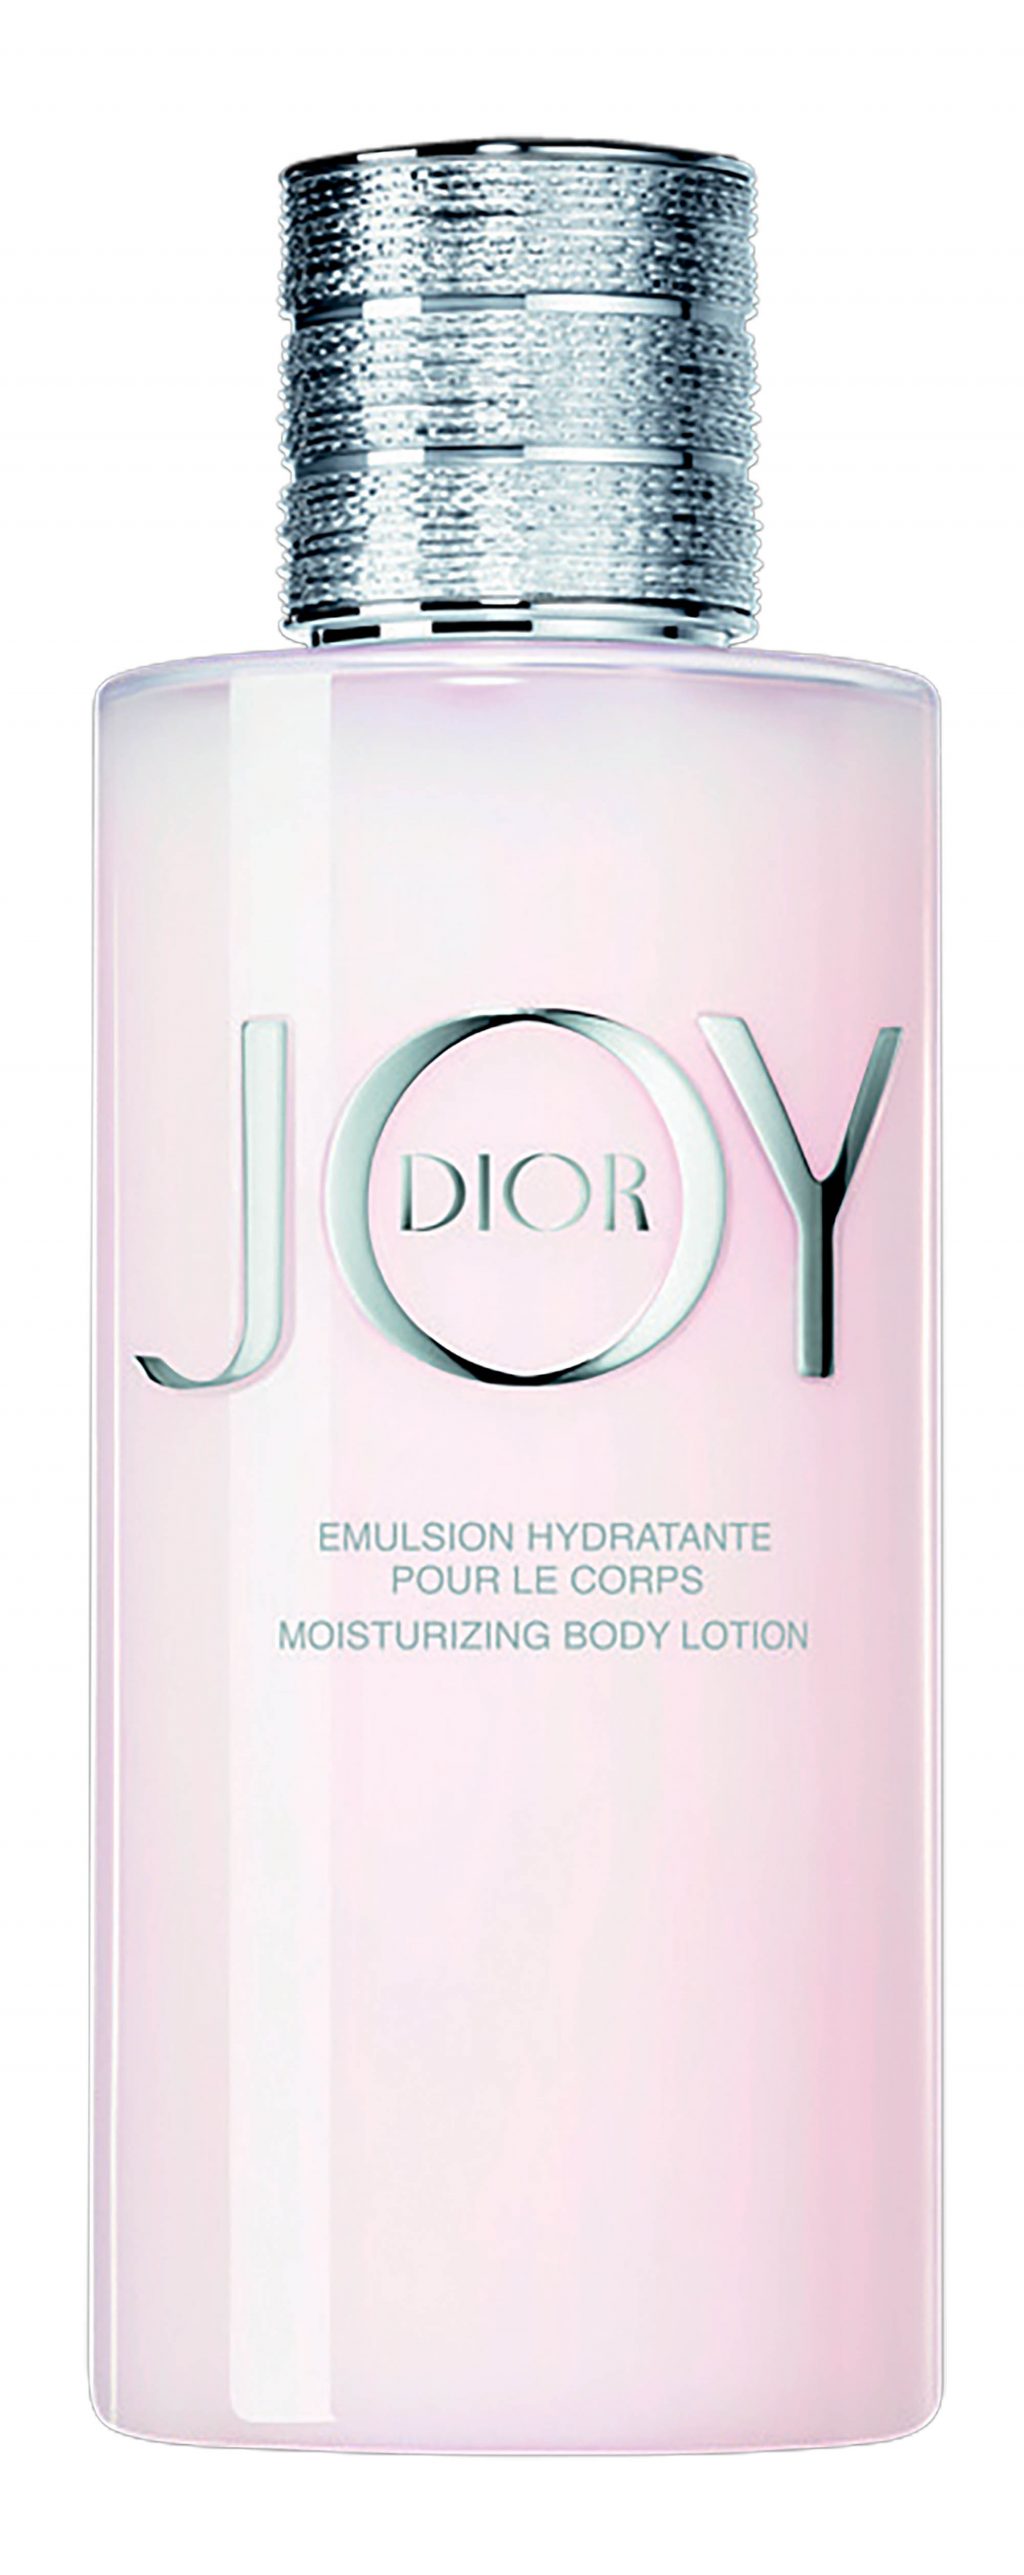 Joy by Dior Moisturizing Body Lotion. 